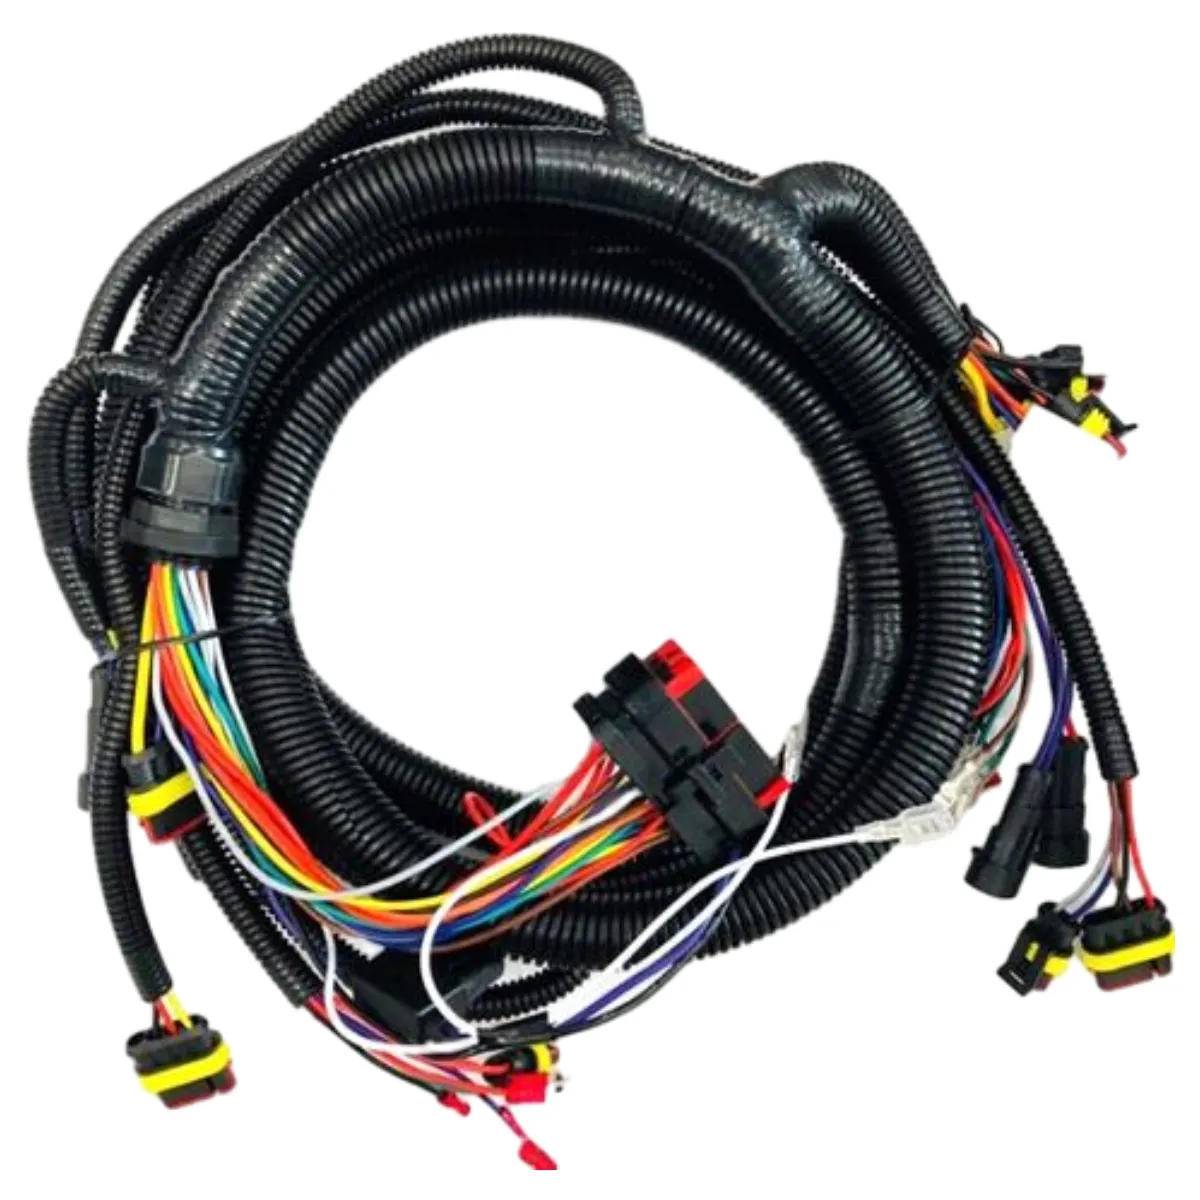 Komple kablo demeti montaj kablosu otomotiv teli kablo demeti OEM Terminal konnektörü, Terminal kablosu ile özelleştirilmiş kablo montajı